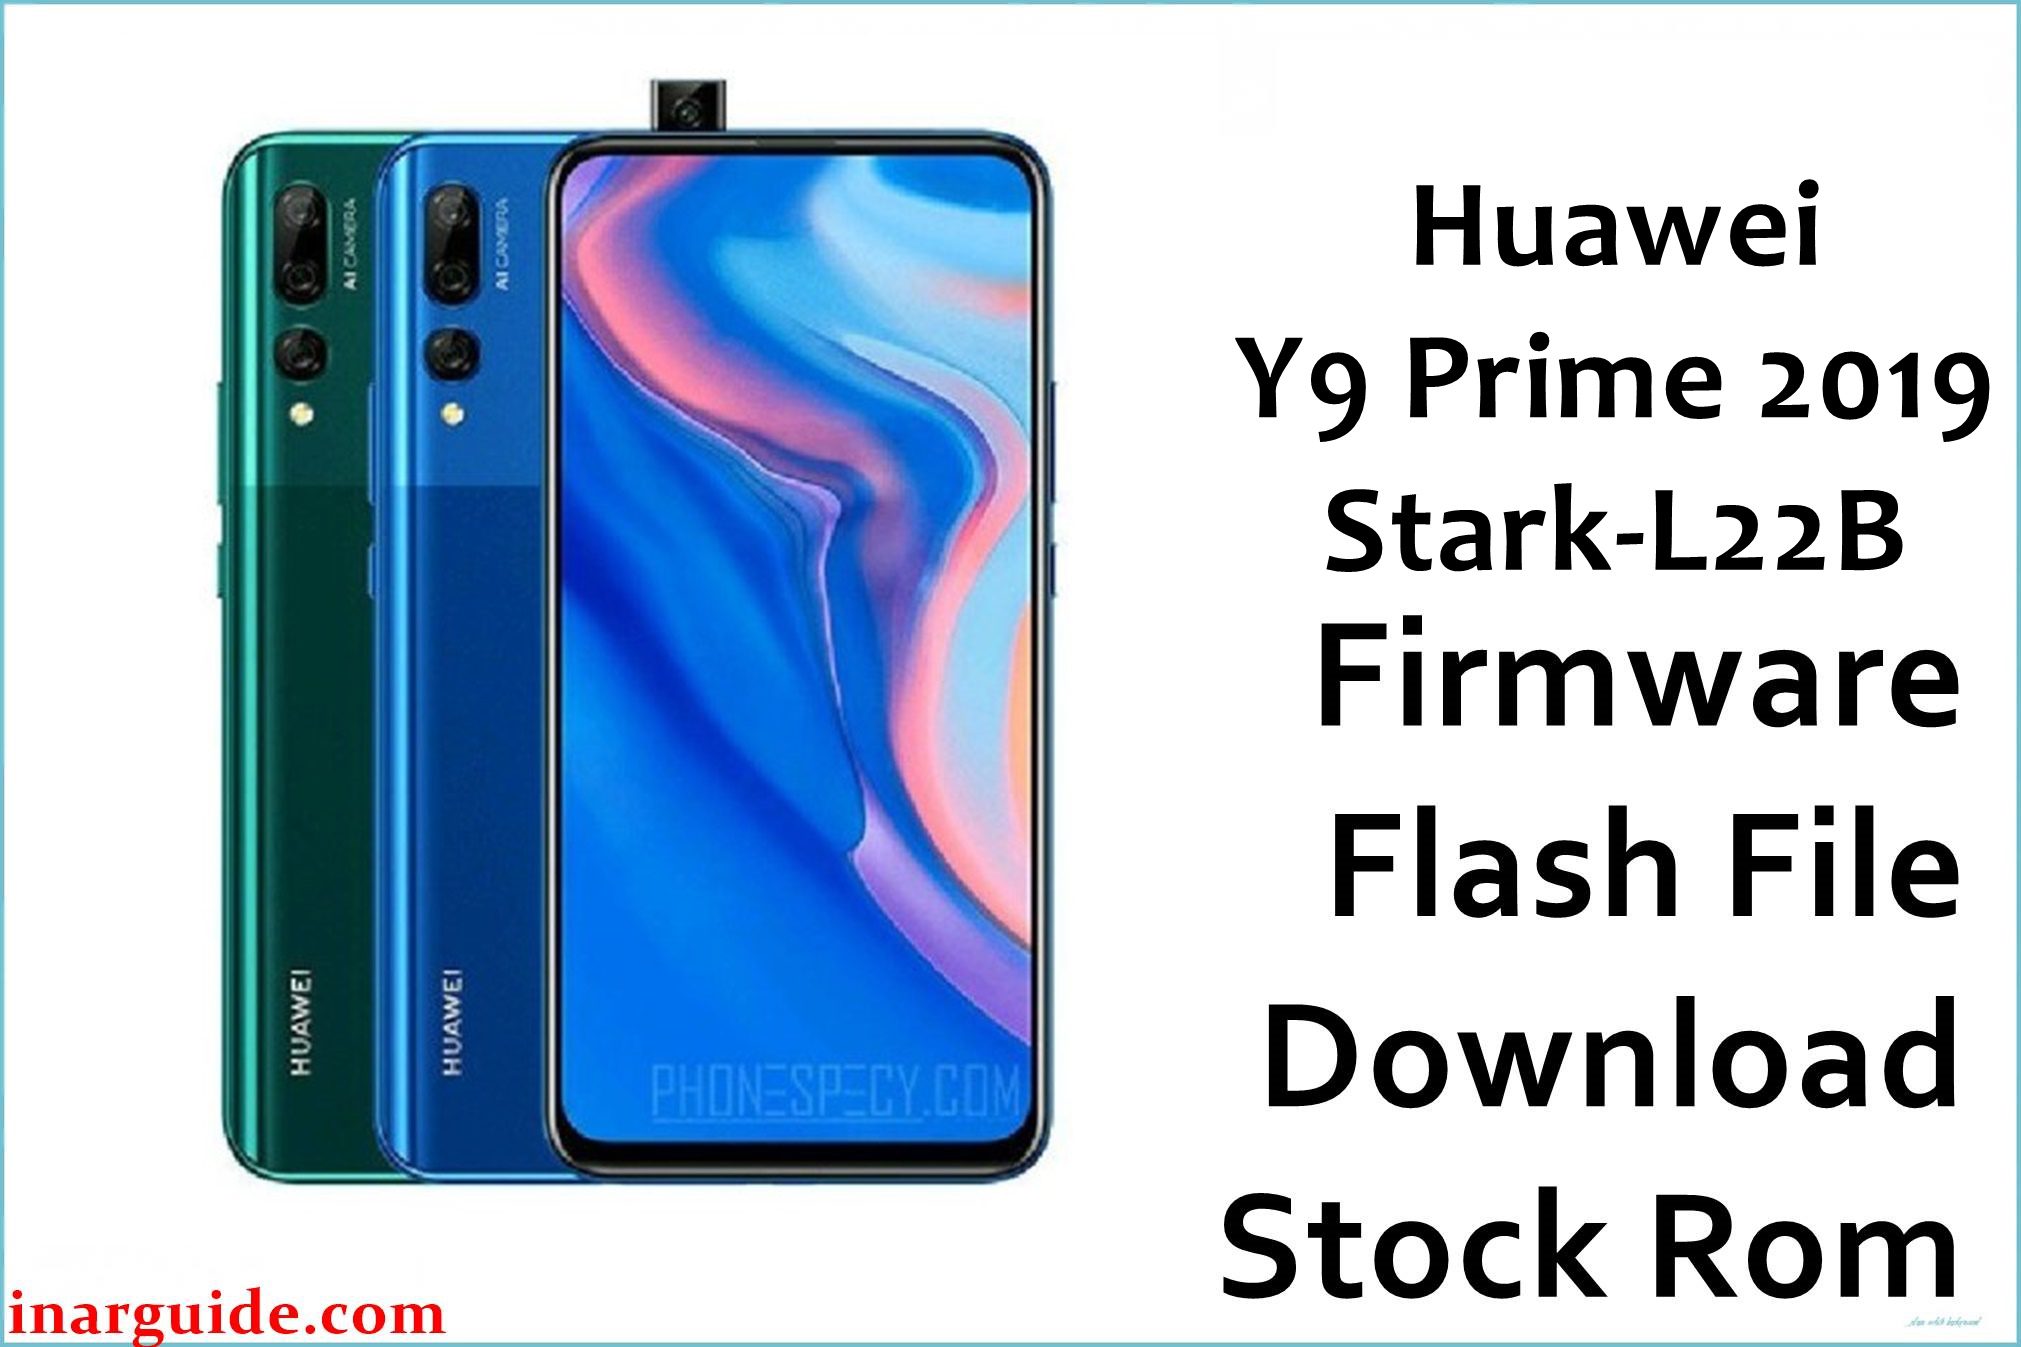 Huawei Y9 Prime 2019 Stark L22B